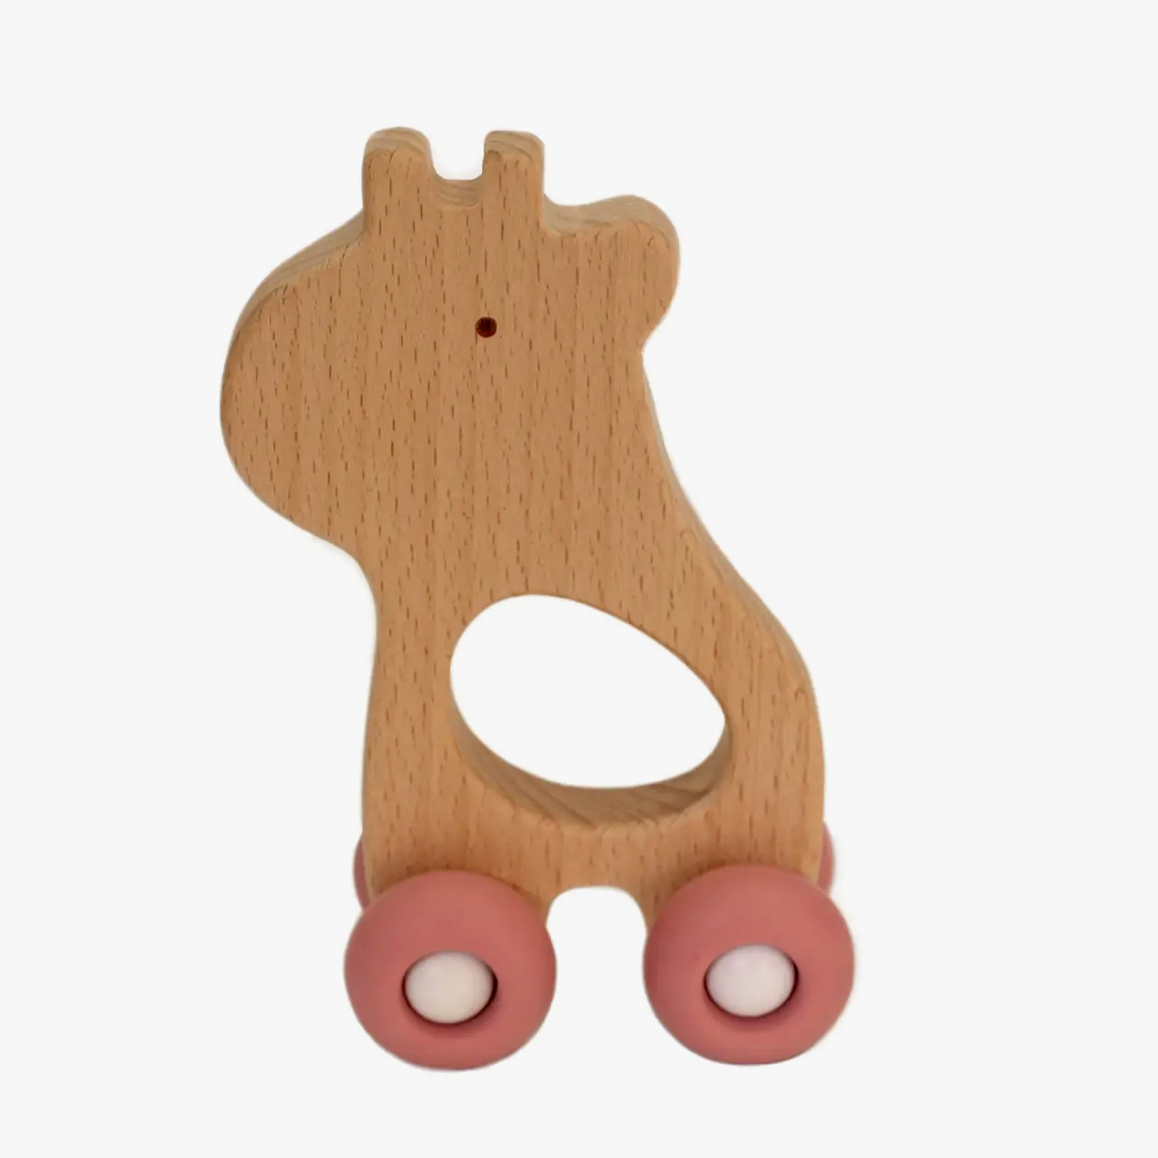 Wooden Teething Push Toy - Giraffe